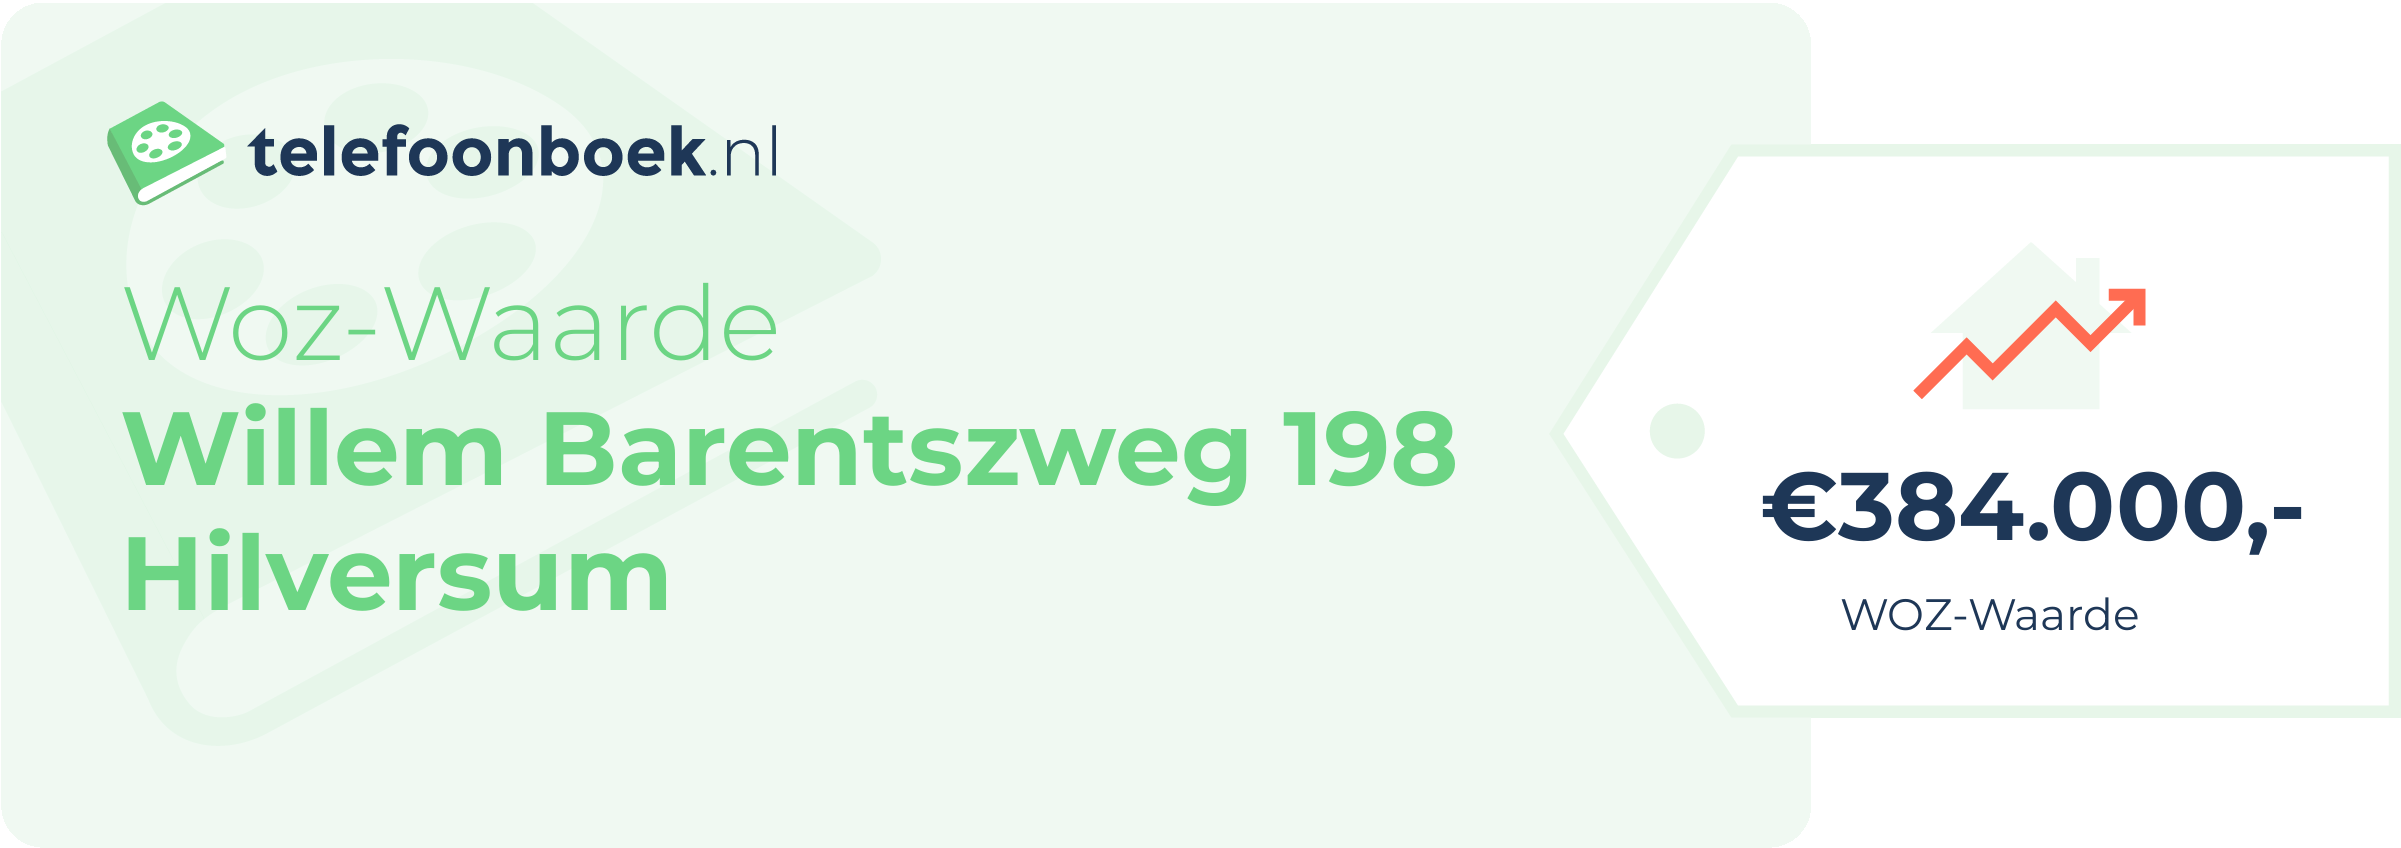 WOZ-waarde Willem Barentszweg 198 Hilversum